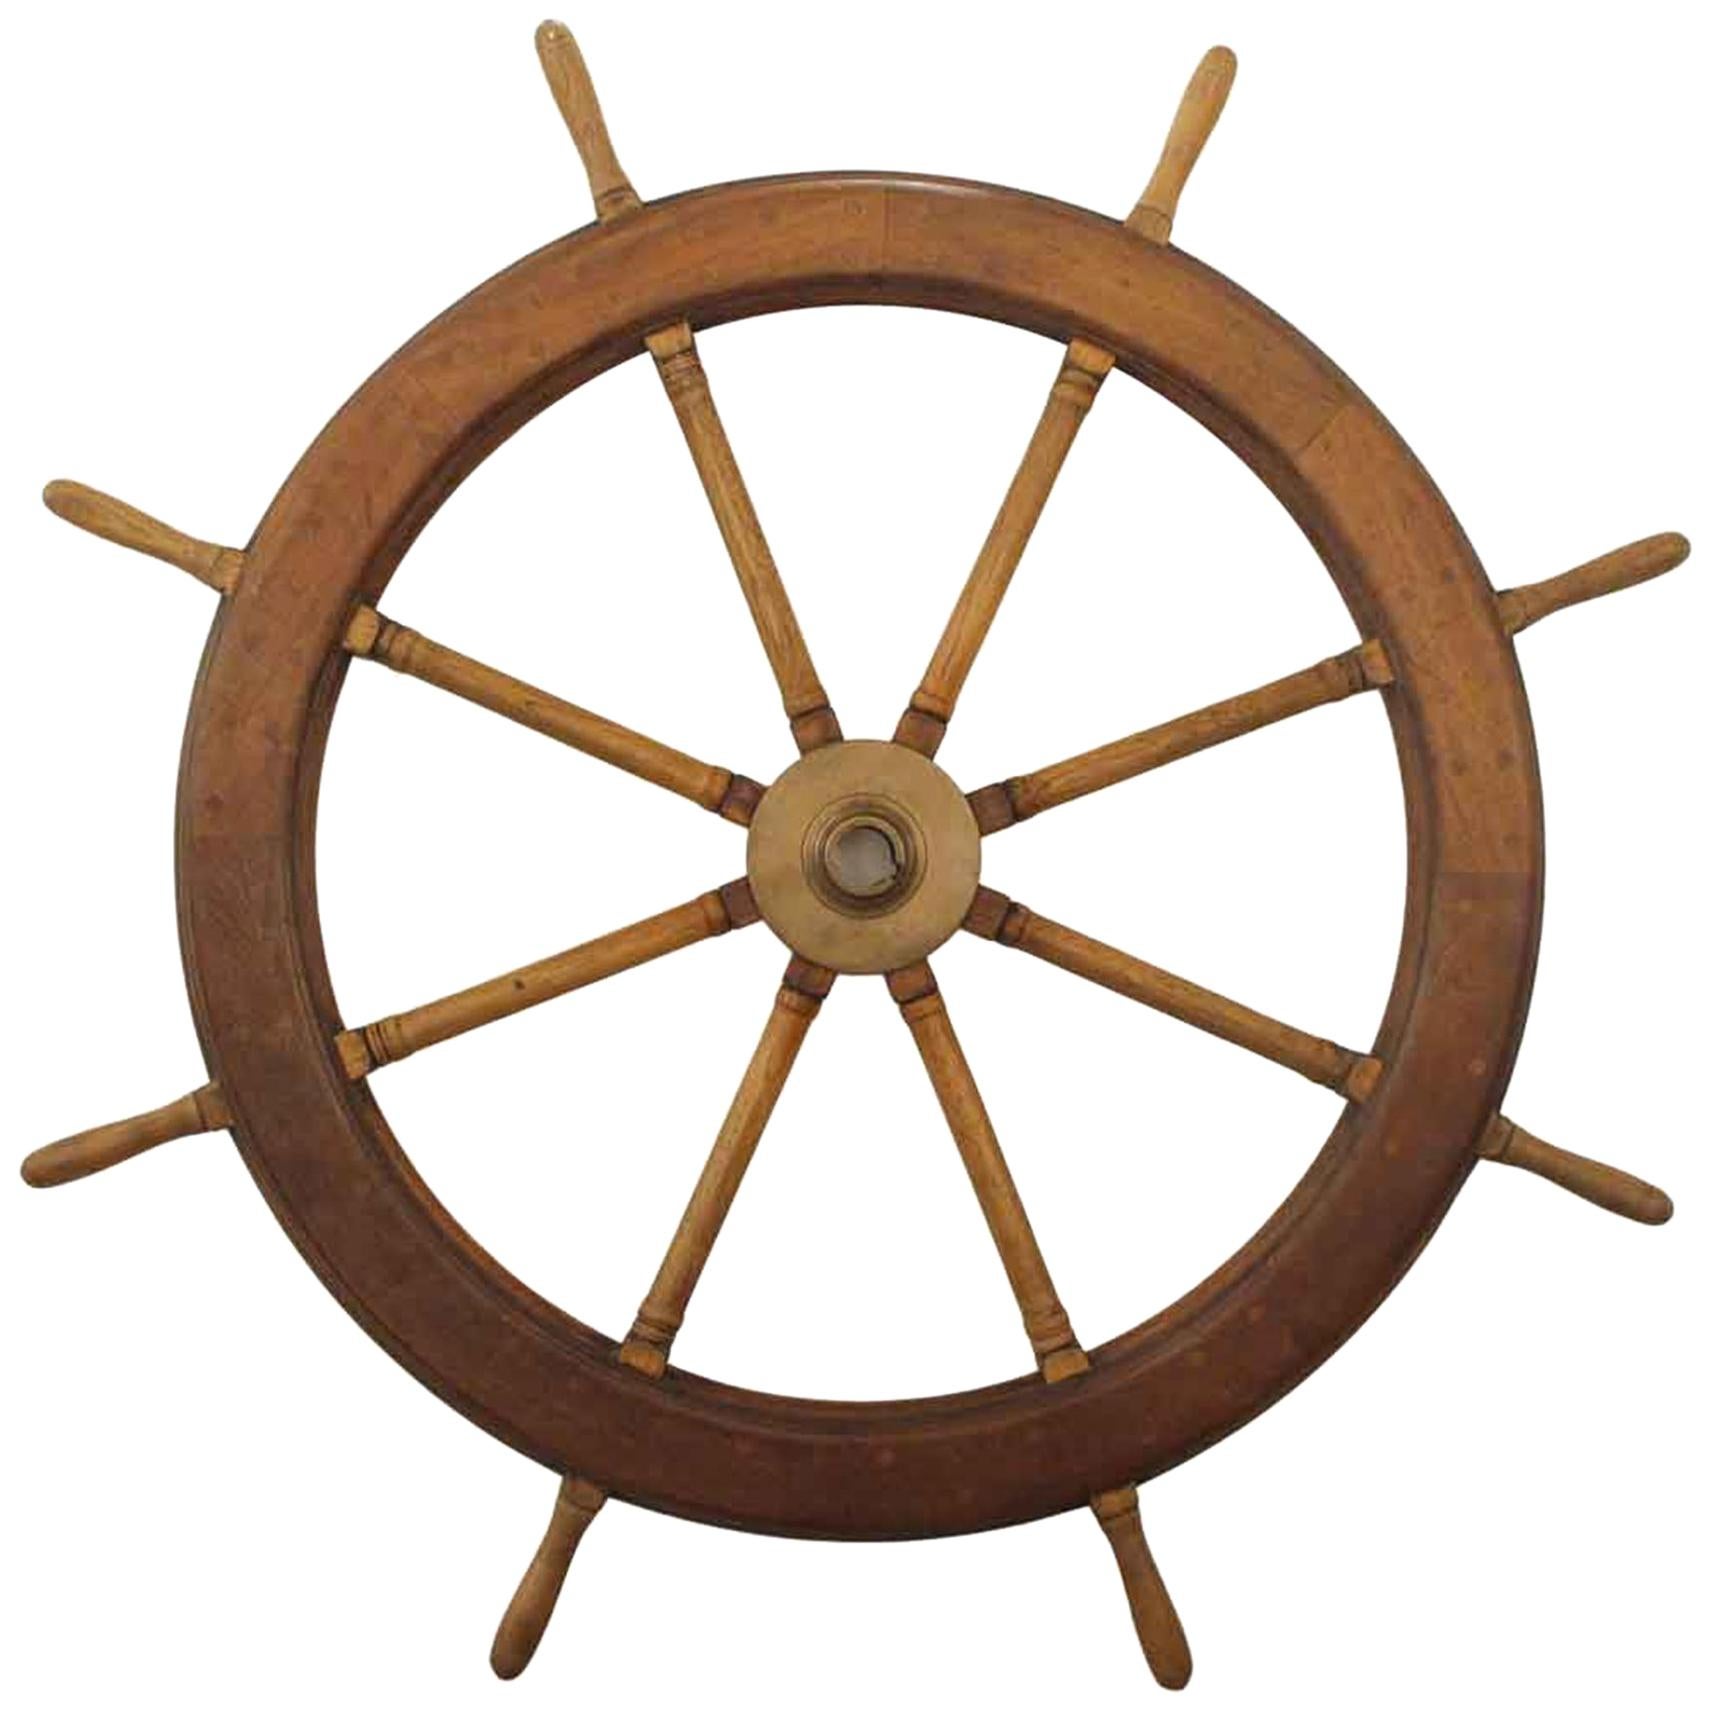 1940s Wood Ship Wheel with Bronze Center Hub, Spoke to Spoke